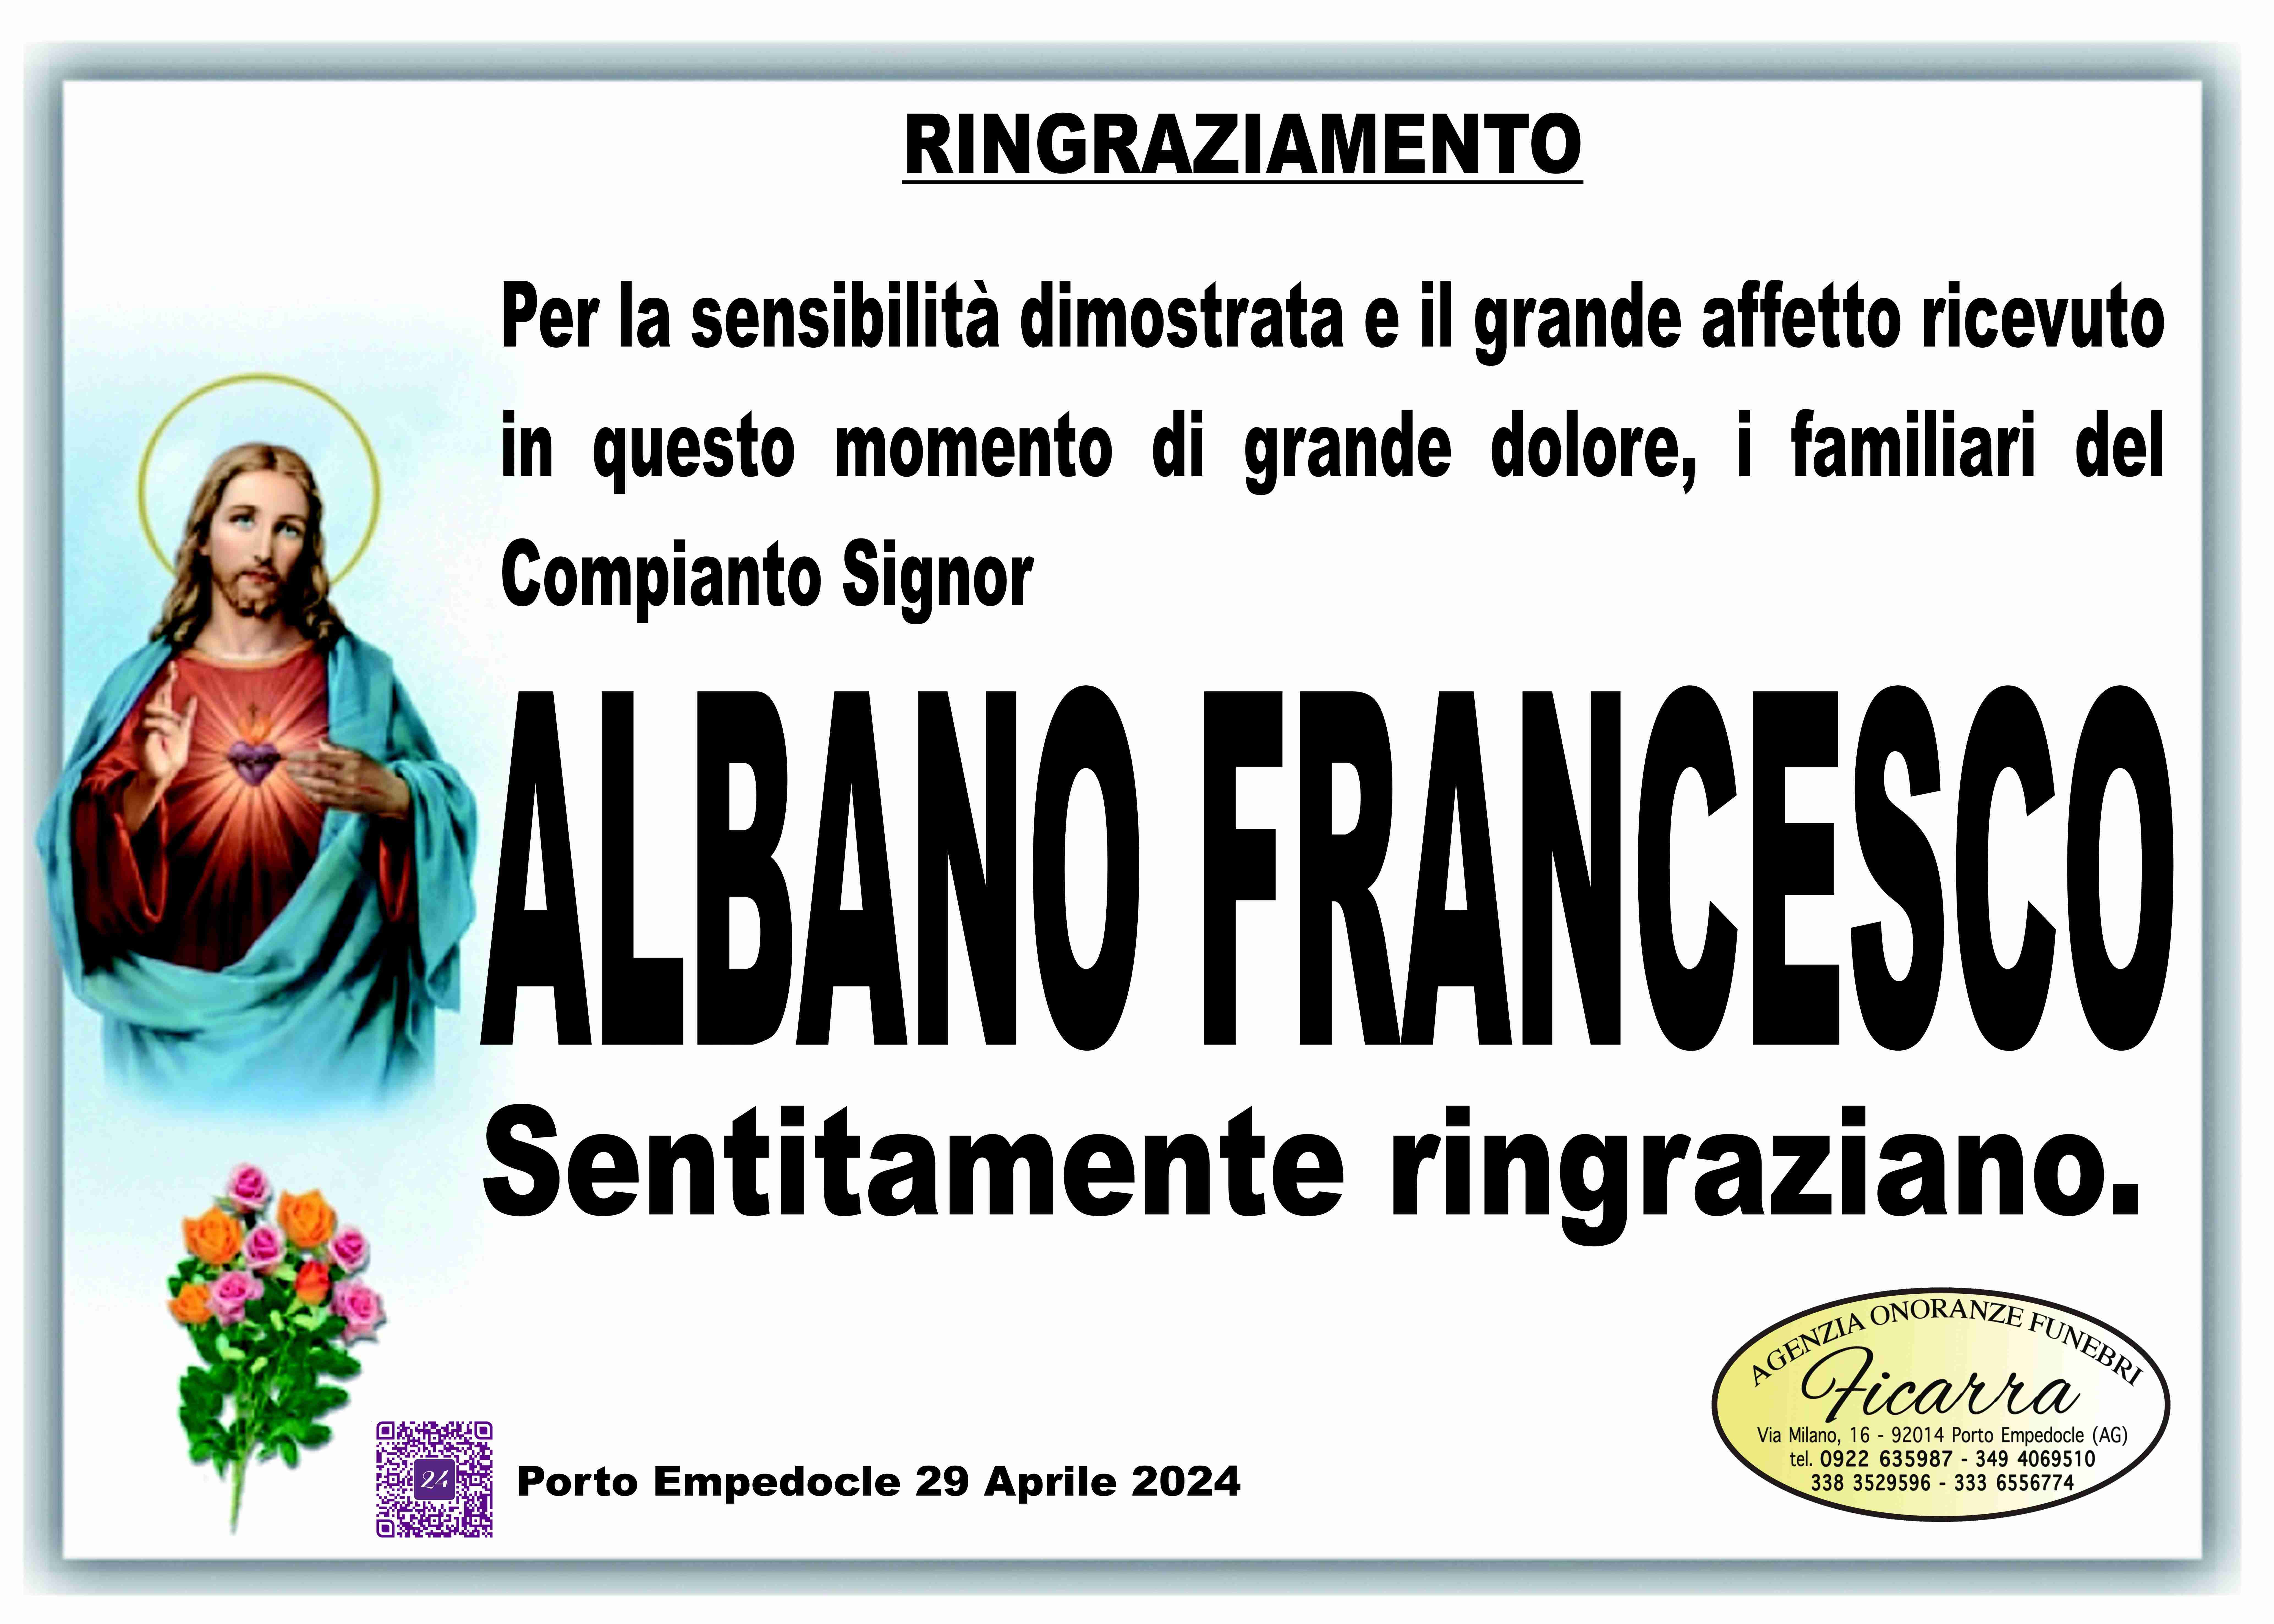 Francesco Albano